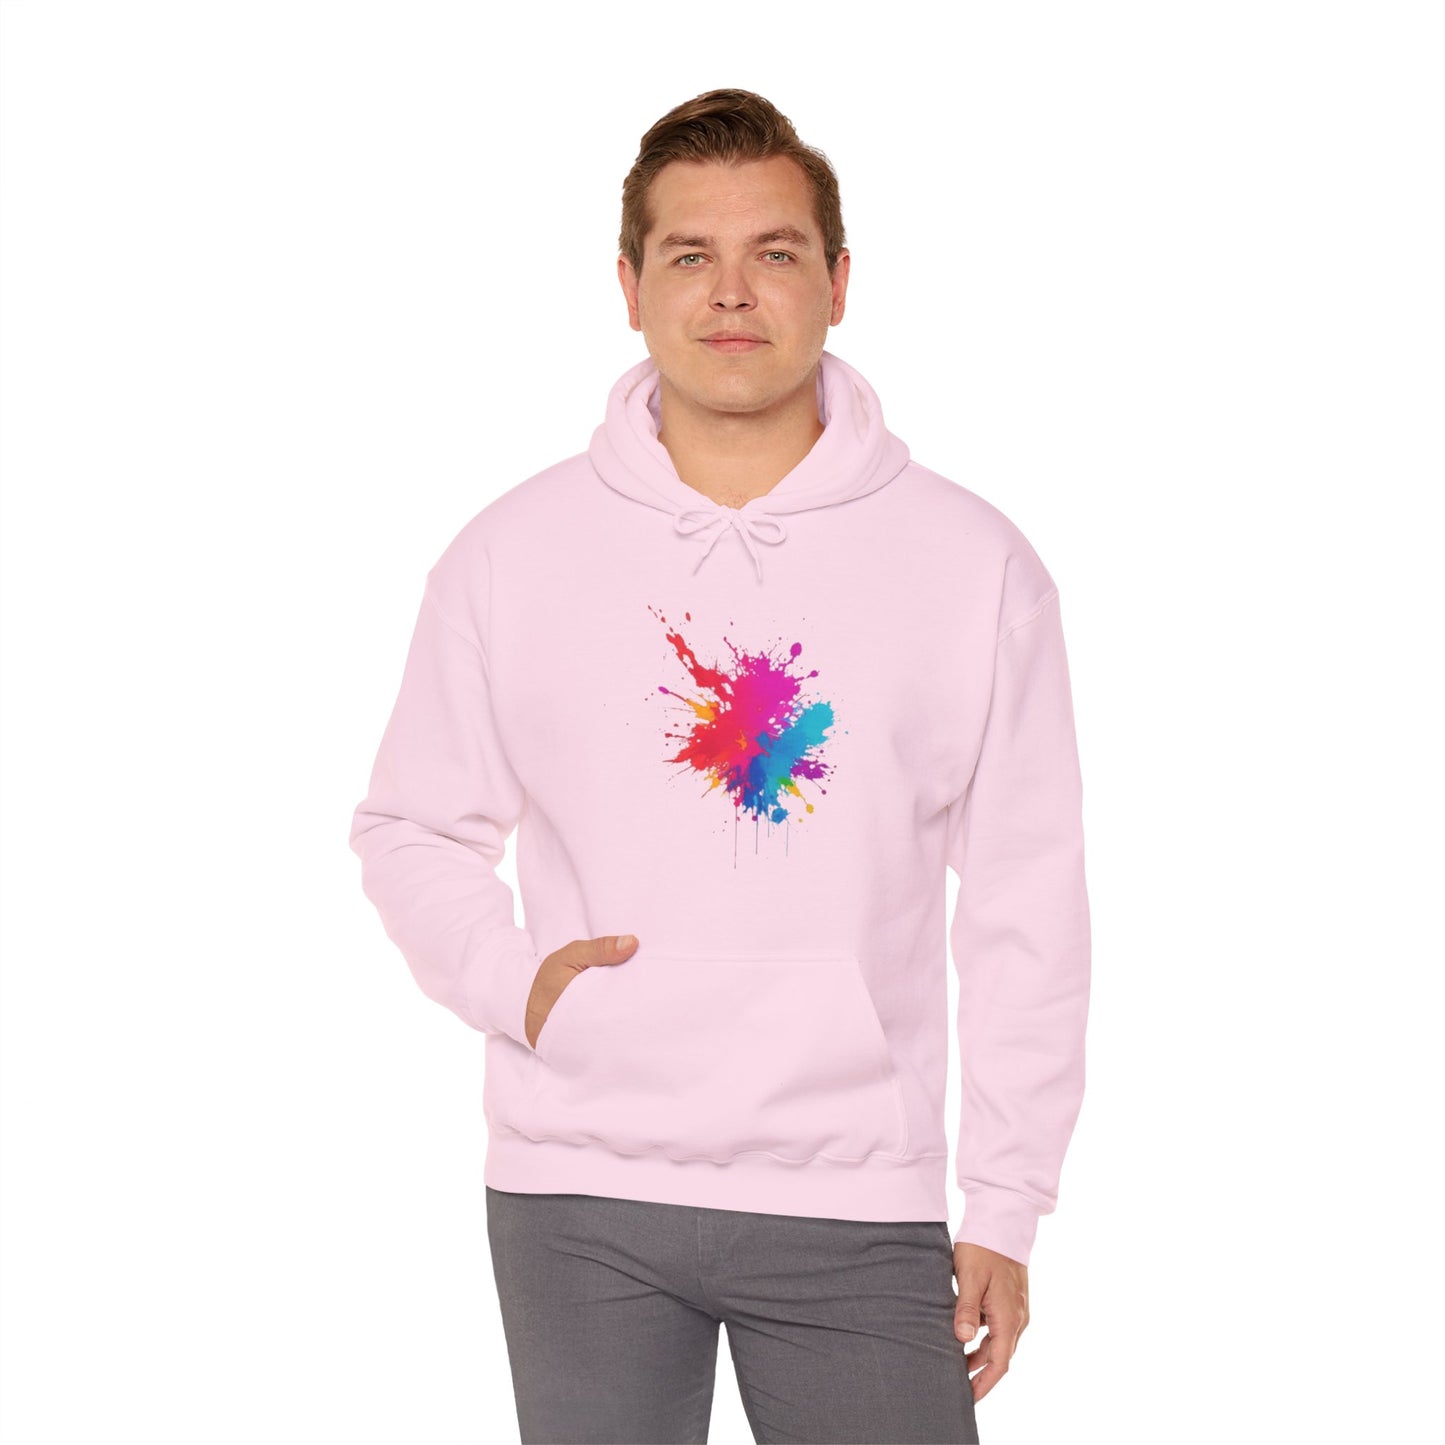 Colourful Paint Splatter - Unisex Hooded Sweatshirt